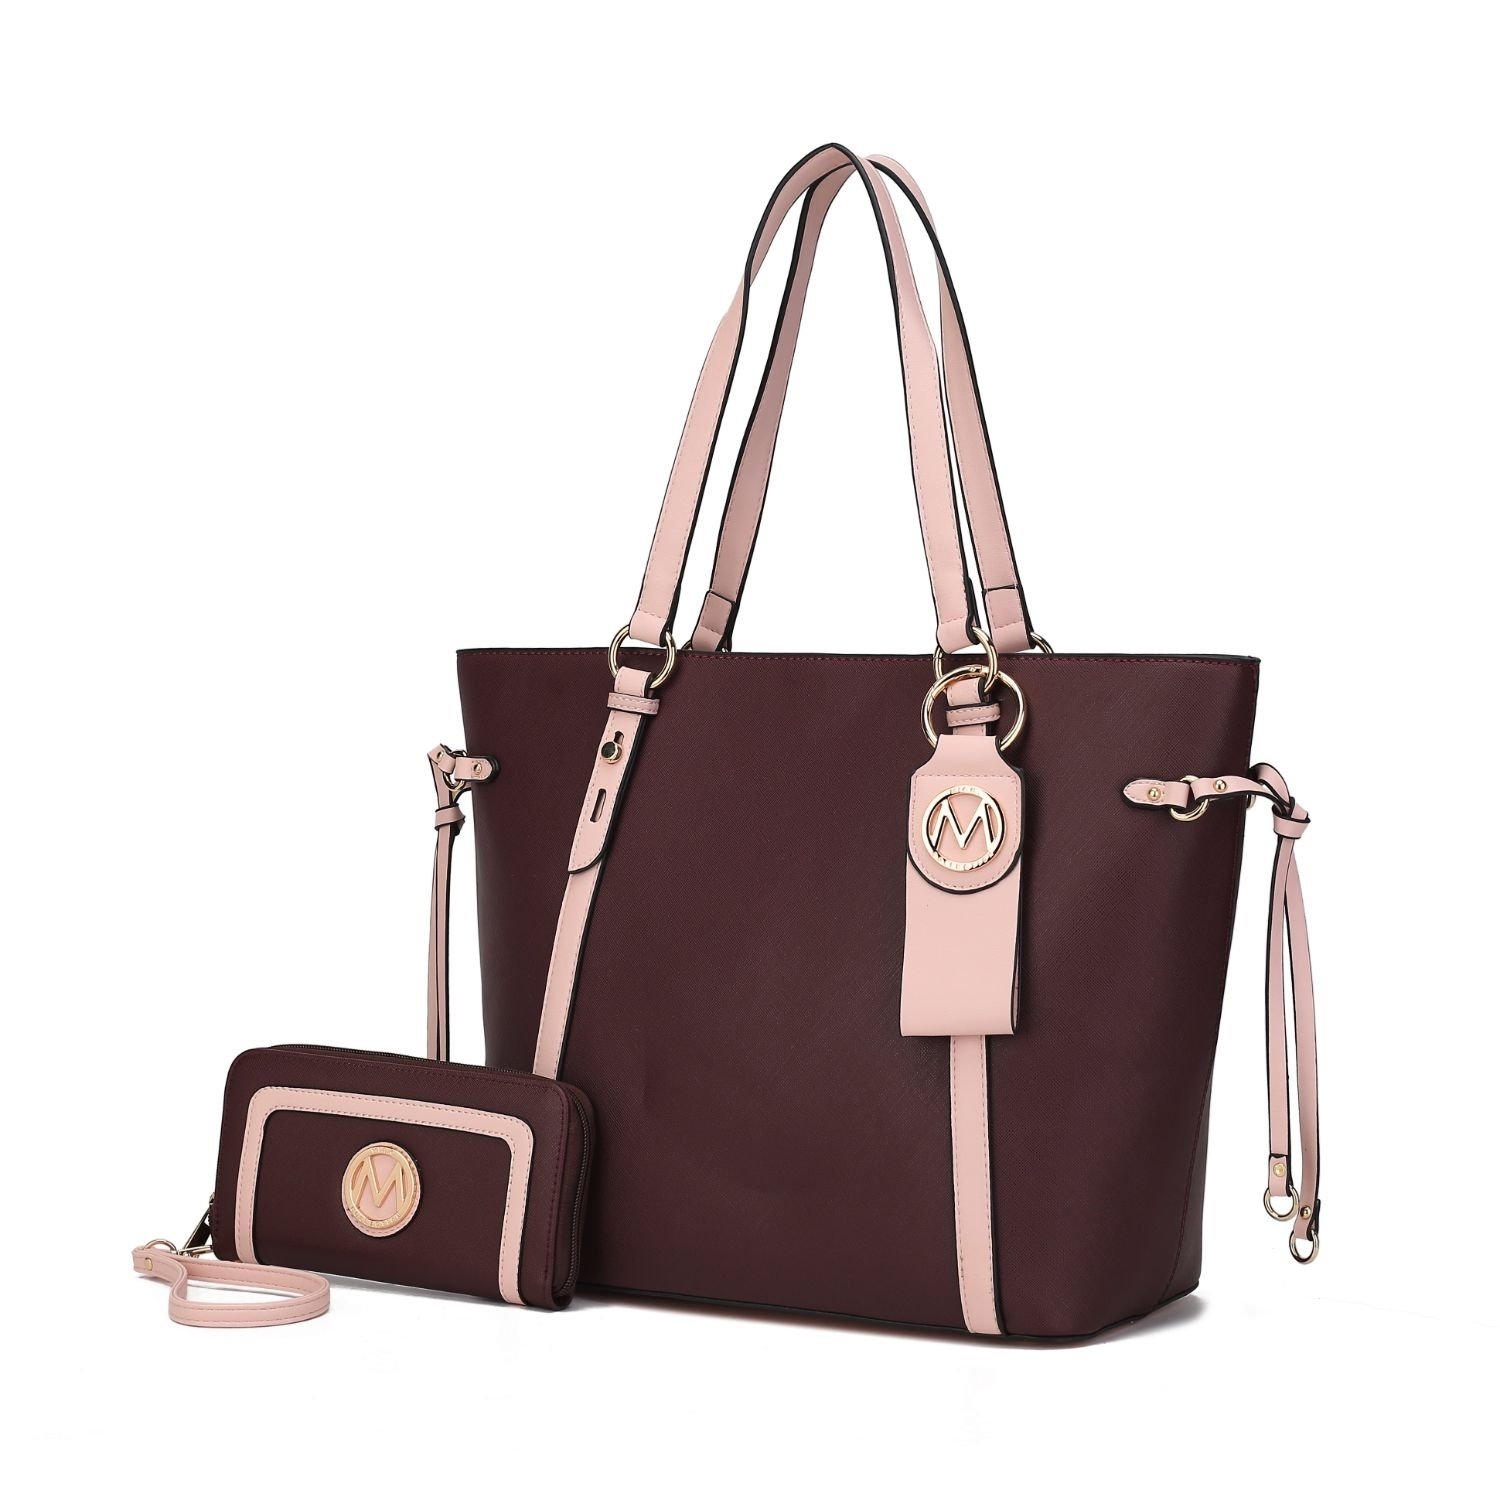 MKF Collection Koeia 3 Pcs Set Tote Handbag, Wallet And Keyring By Mia K. - Burgundy Blush